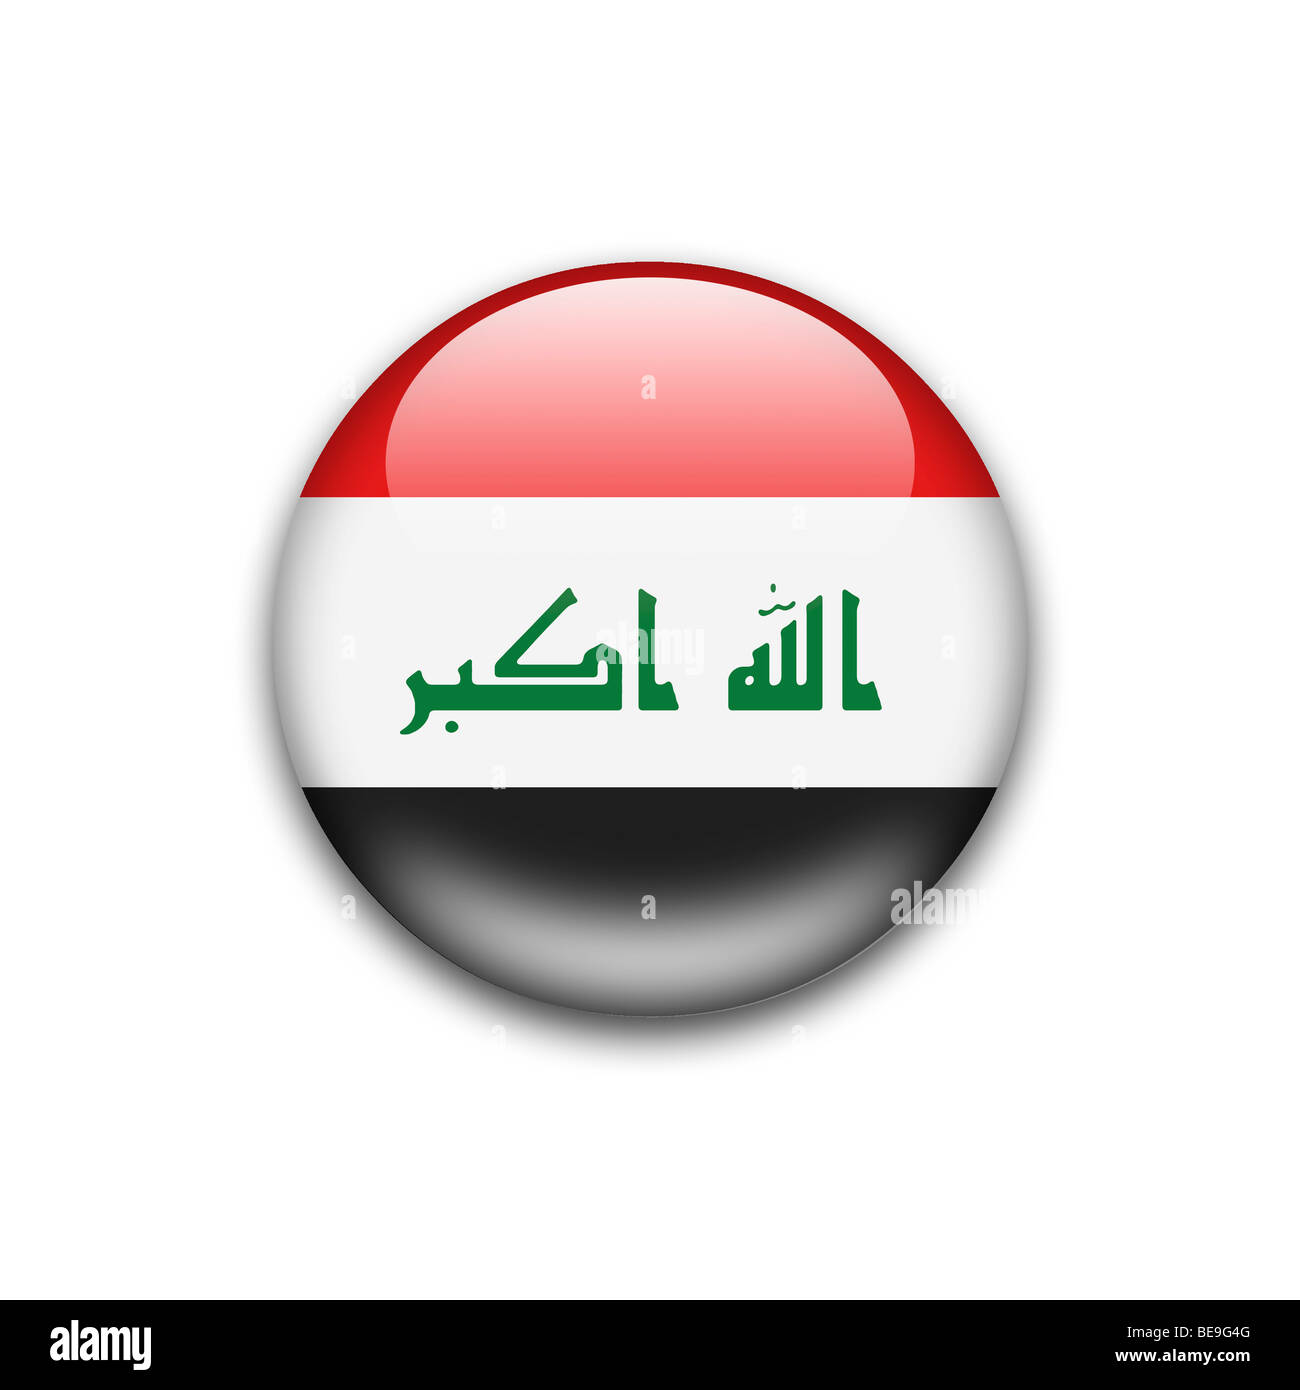 High-quality image of the iraqi national flag on Craiyon